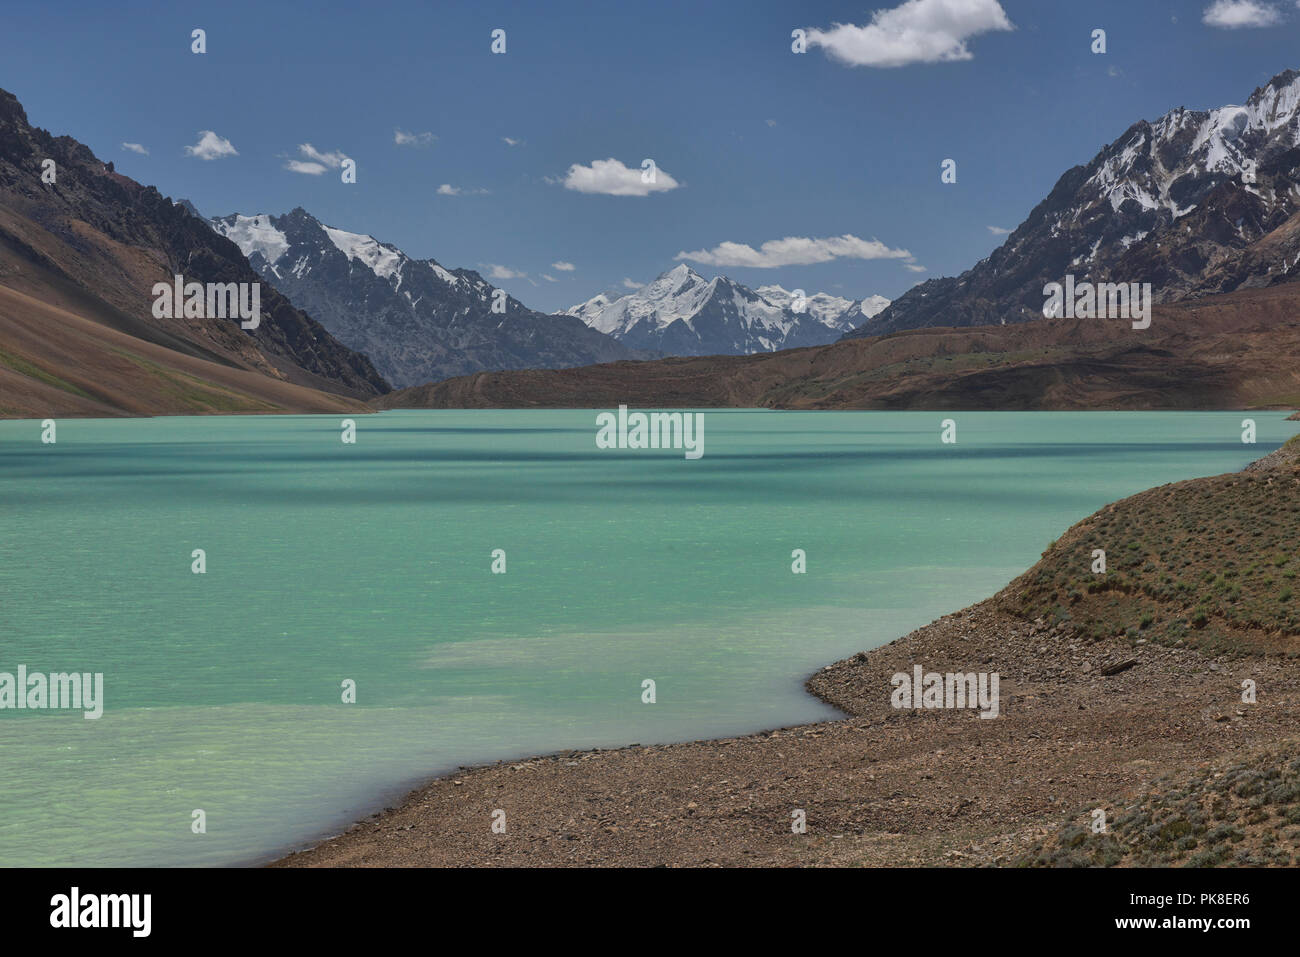 Khafrazdara Lake, Tajik National Park, Tajikistan. Stock Photo